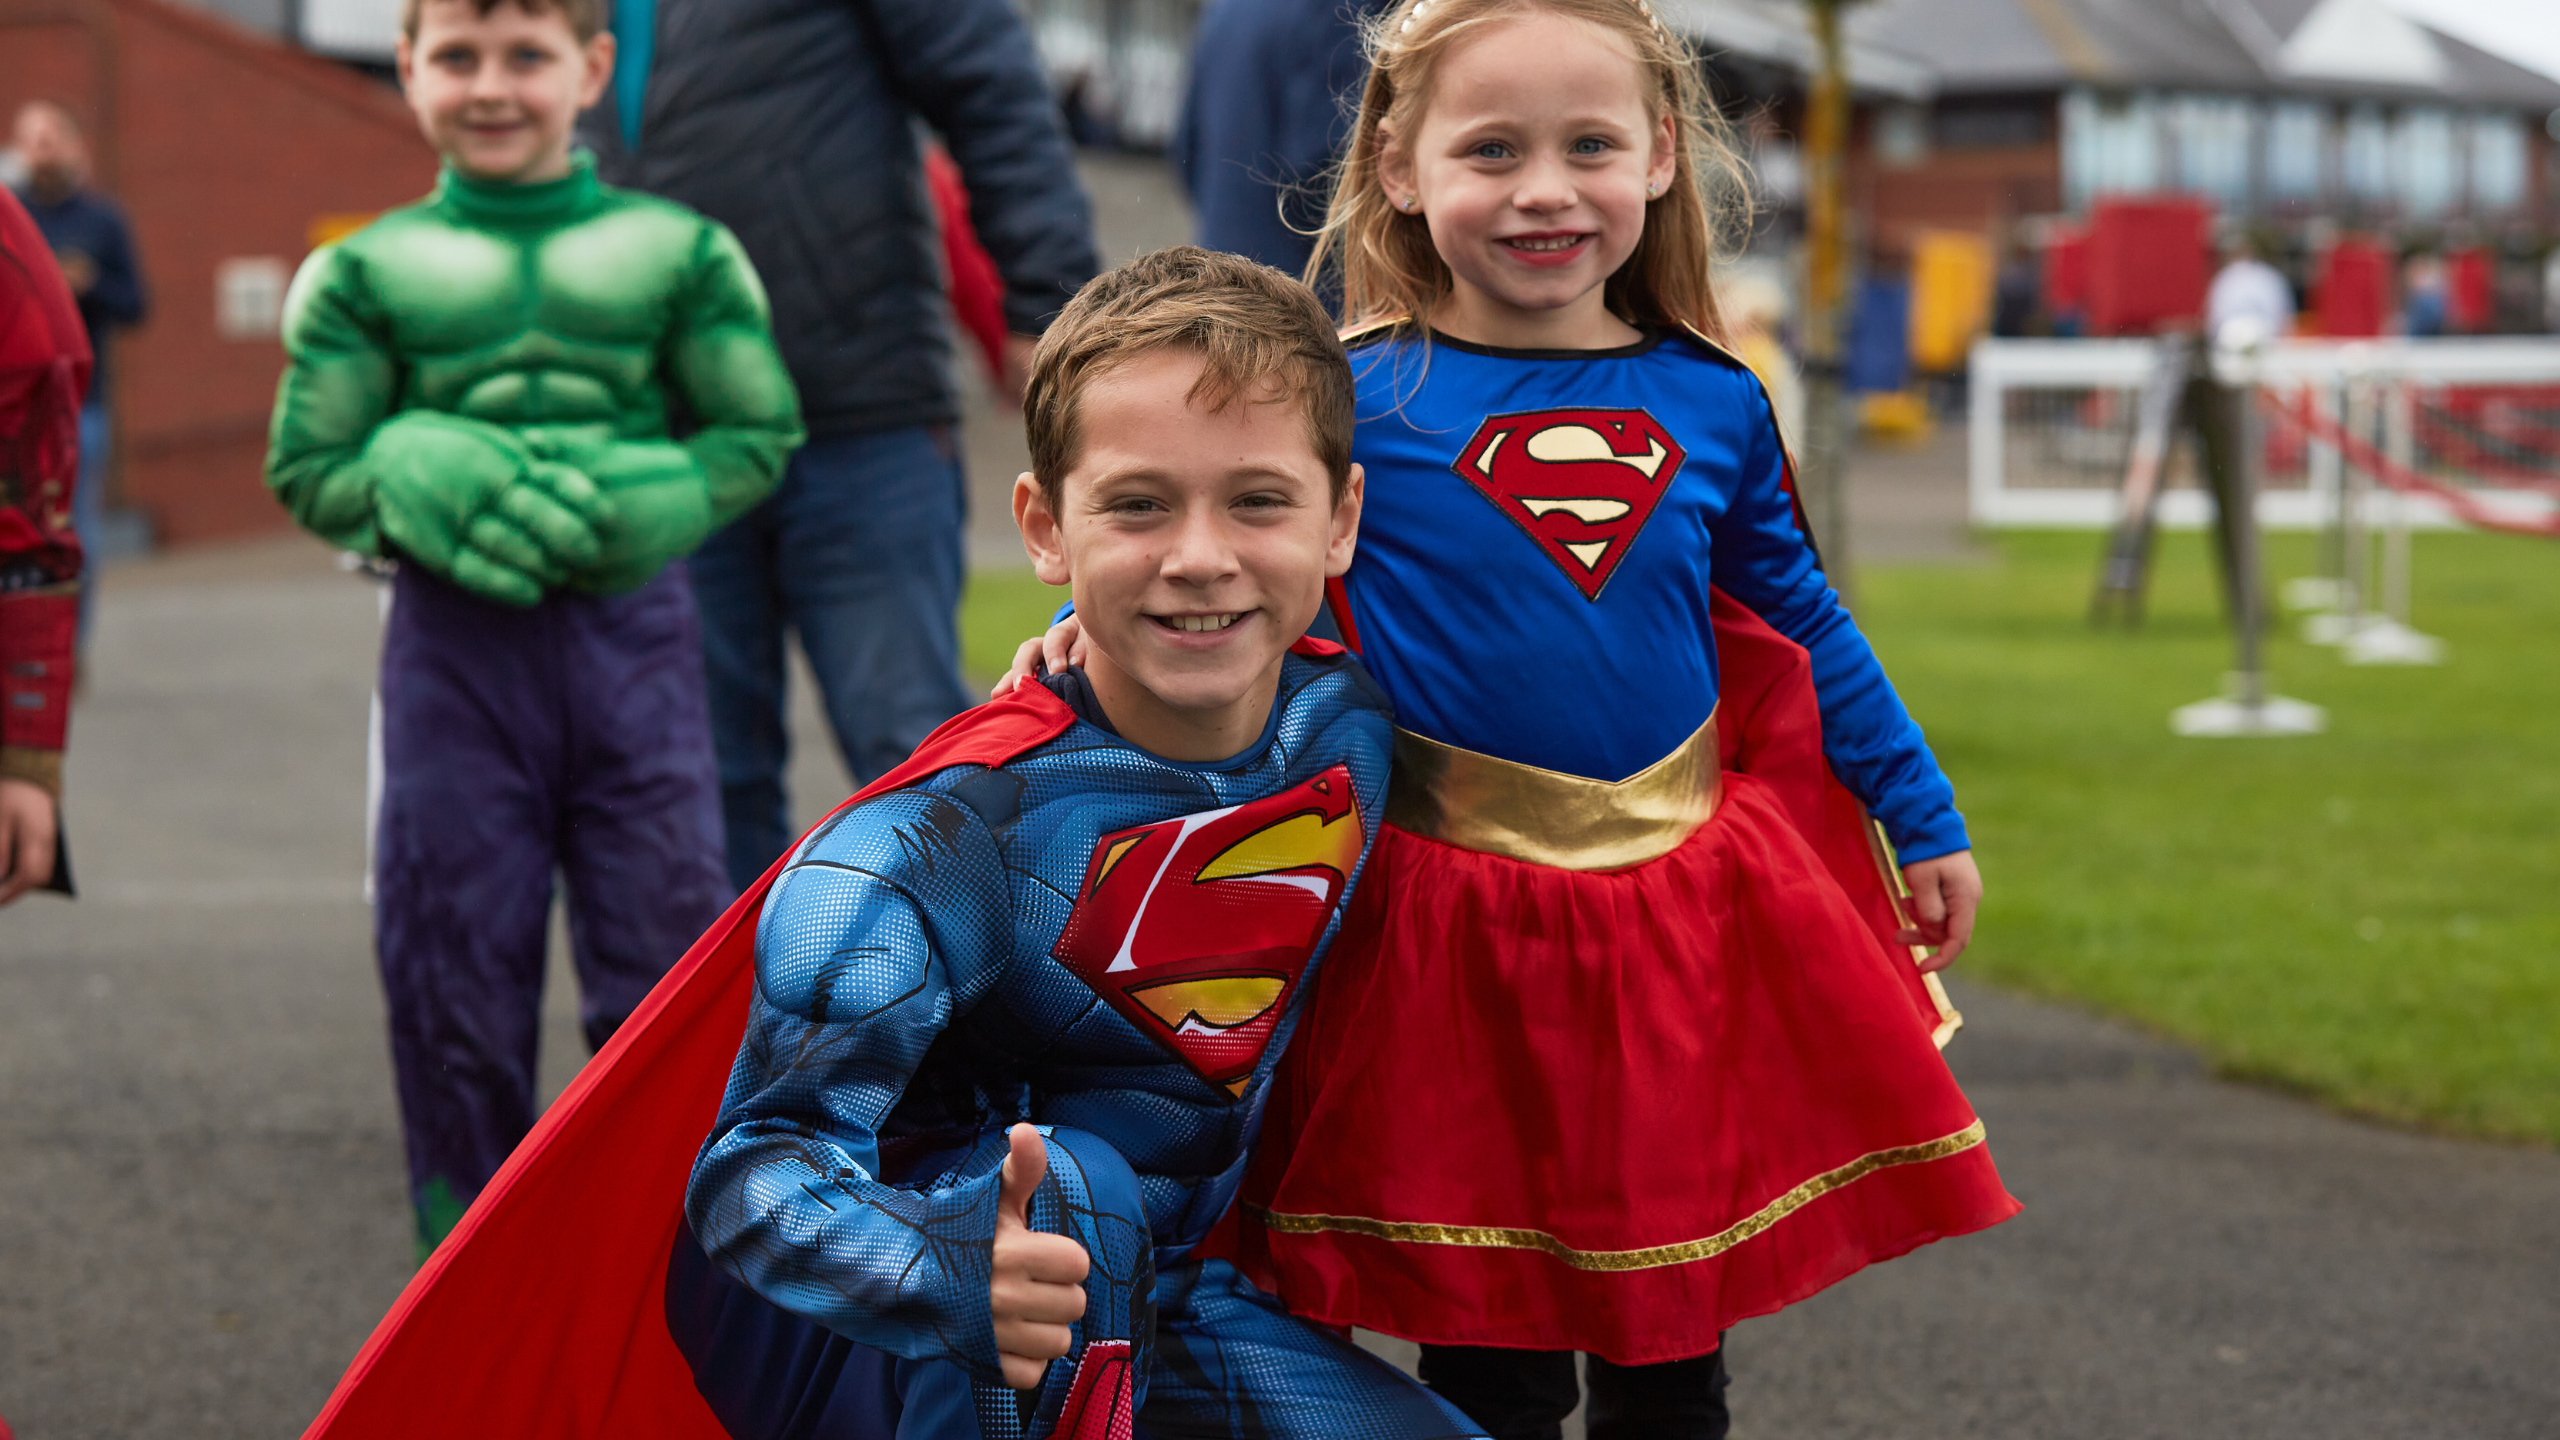 The Superhero Family Raceday